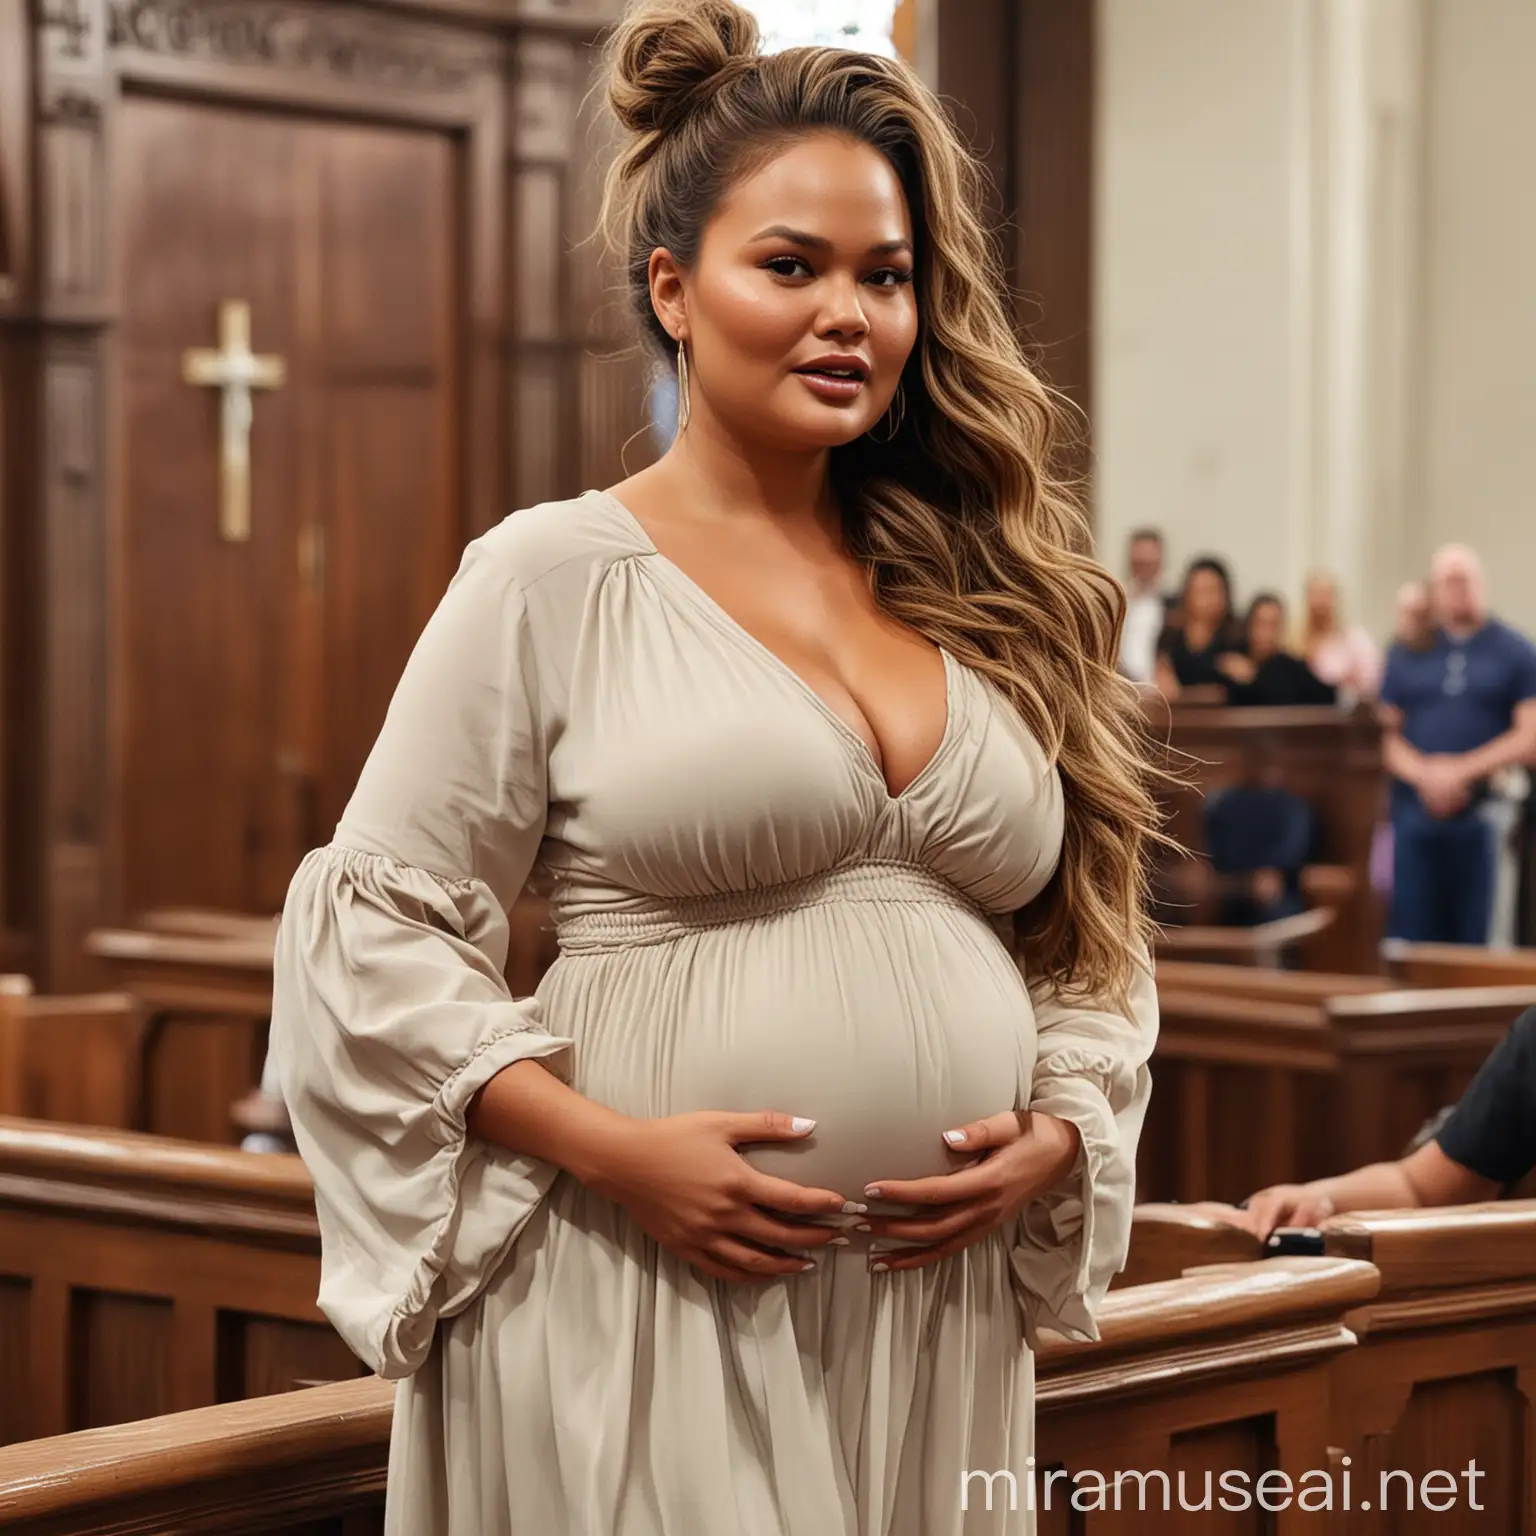 Chrissy Teigen Pregnant Church Fashion Big Belly and Stunning Cleavage Display